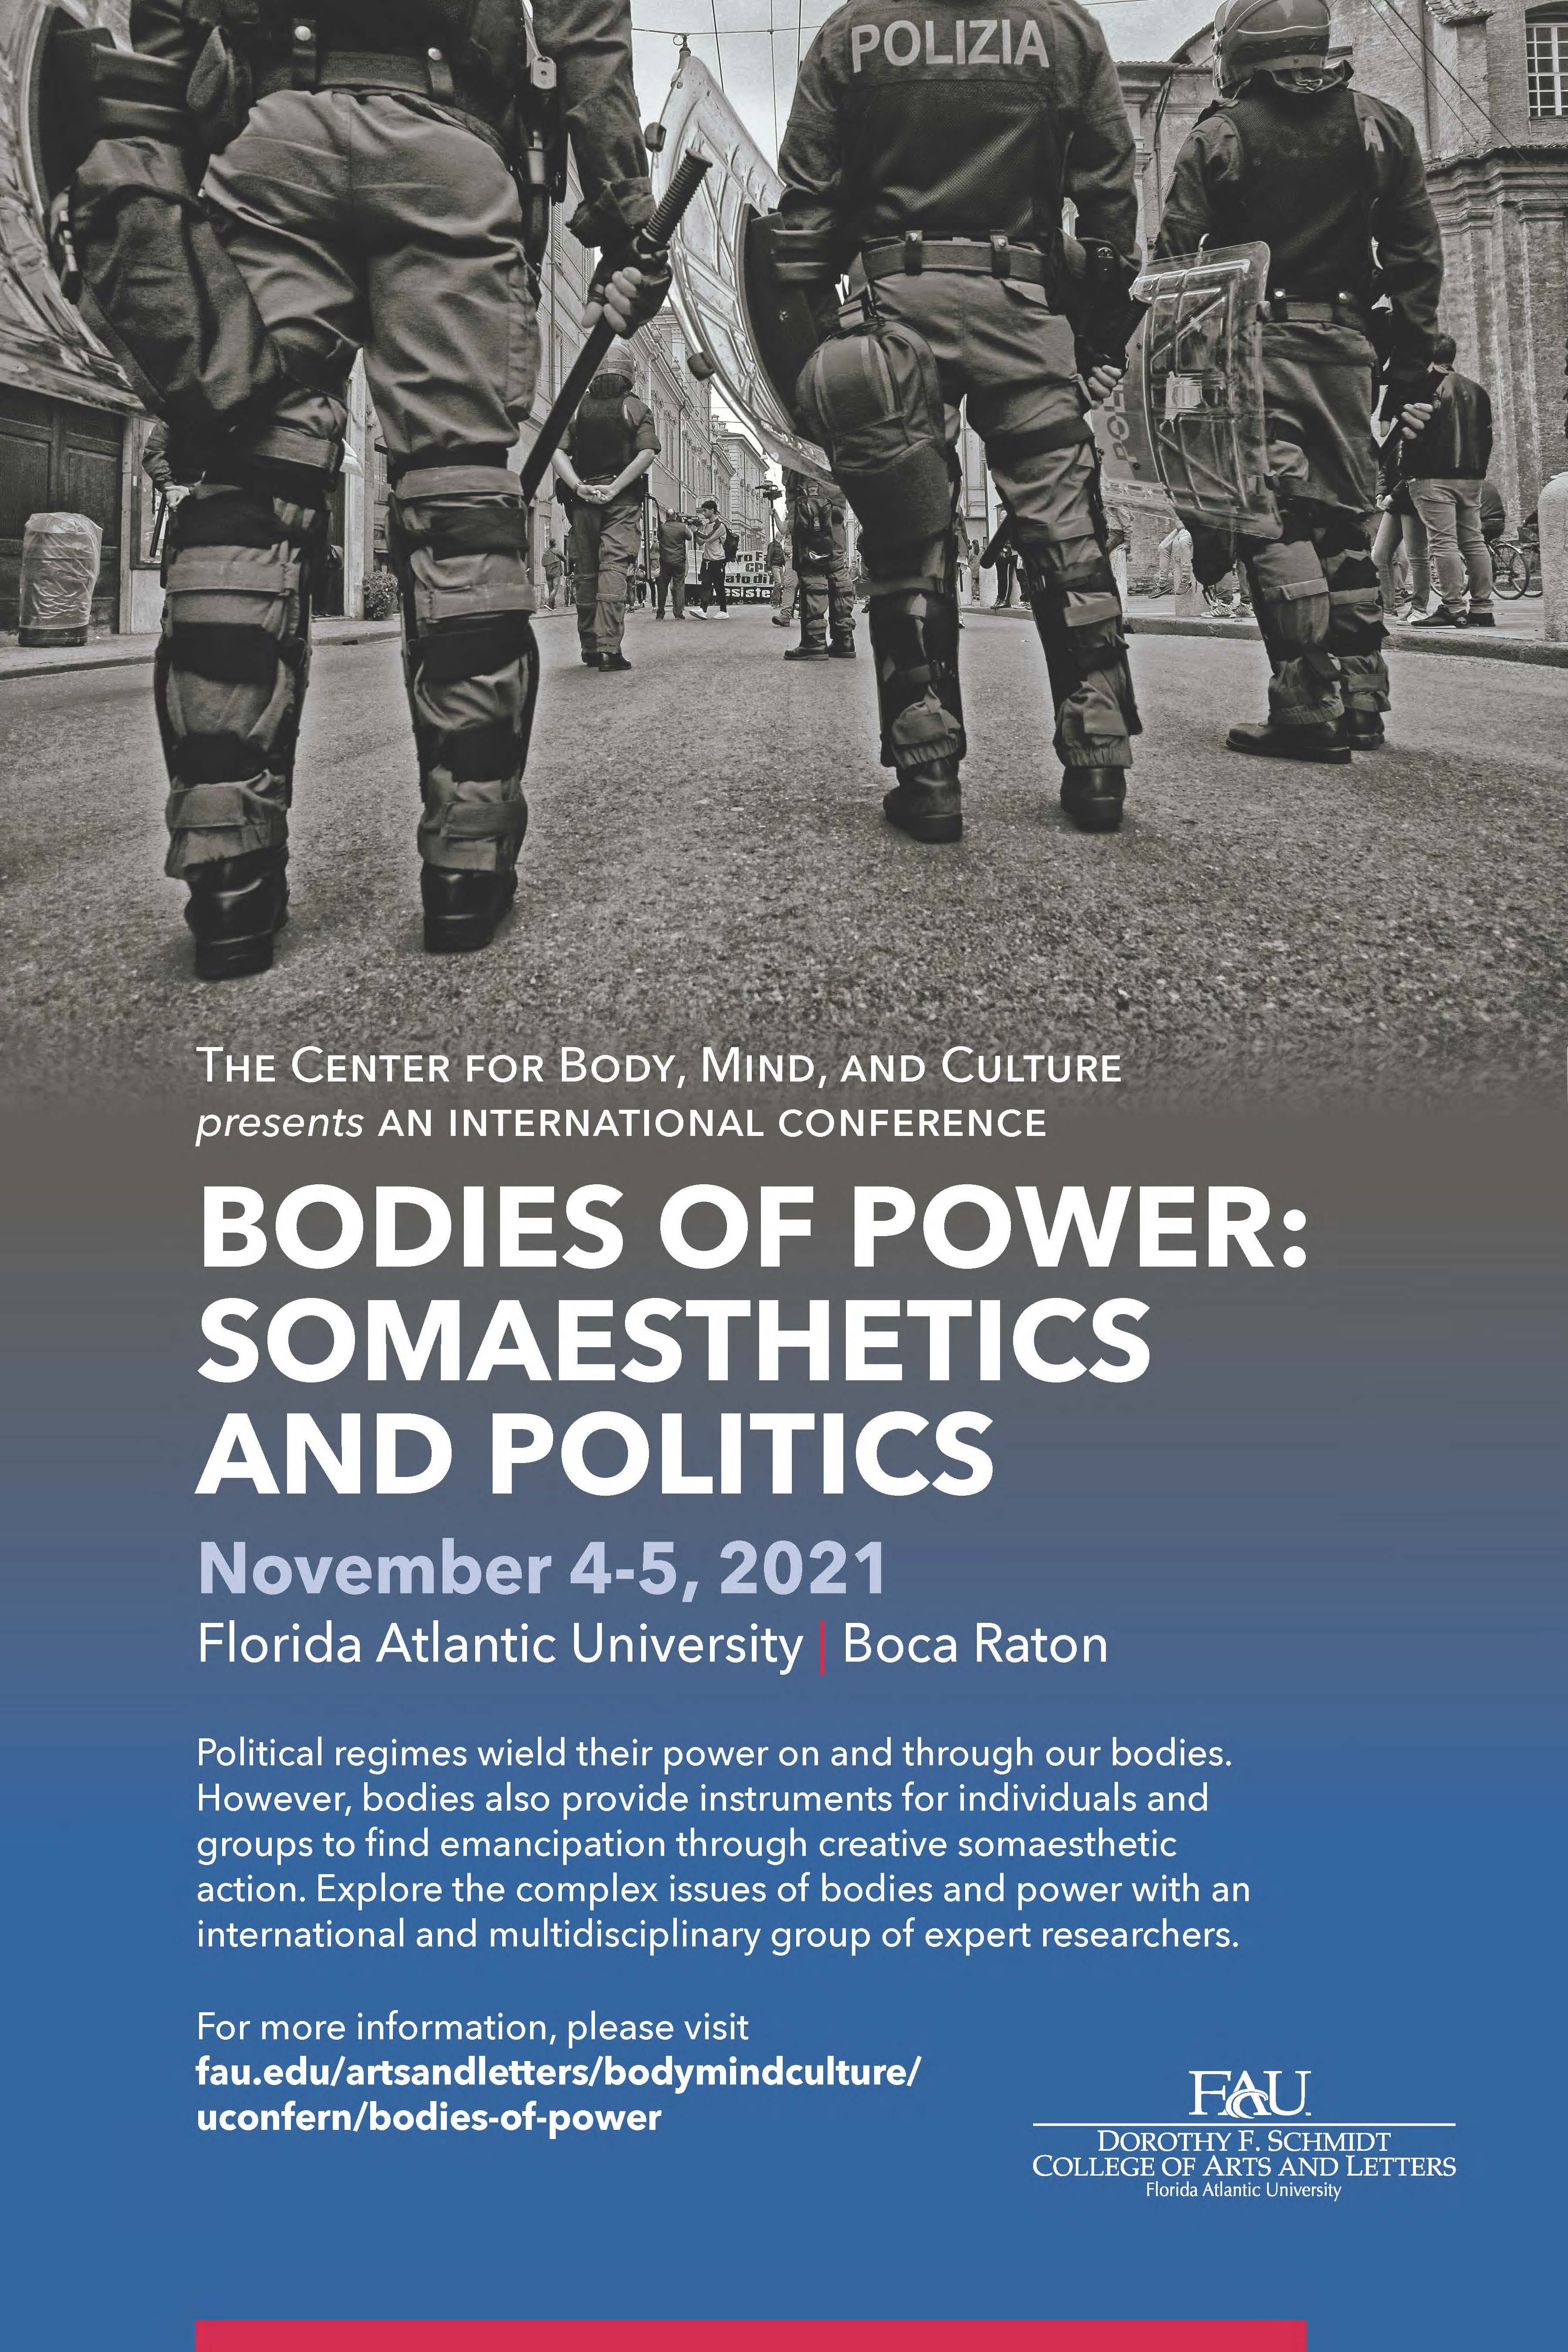 https://www.fau.edu/artsandletters/bodymindculture/uconfern/bodies-of-power/index/